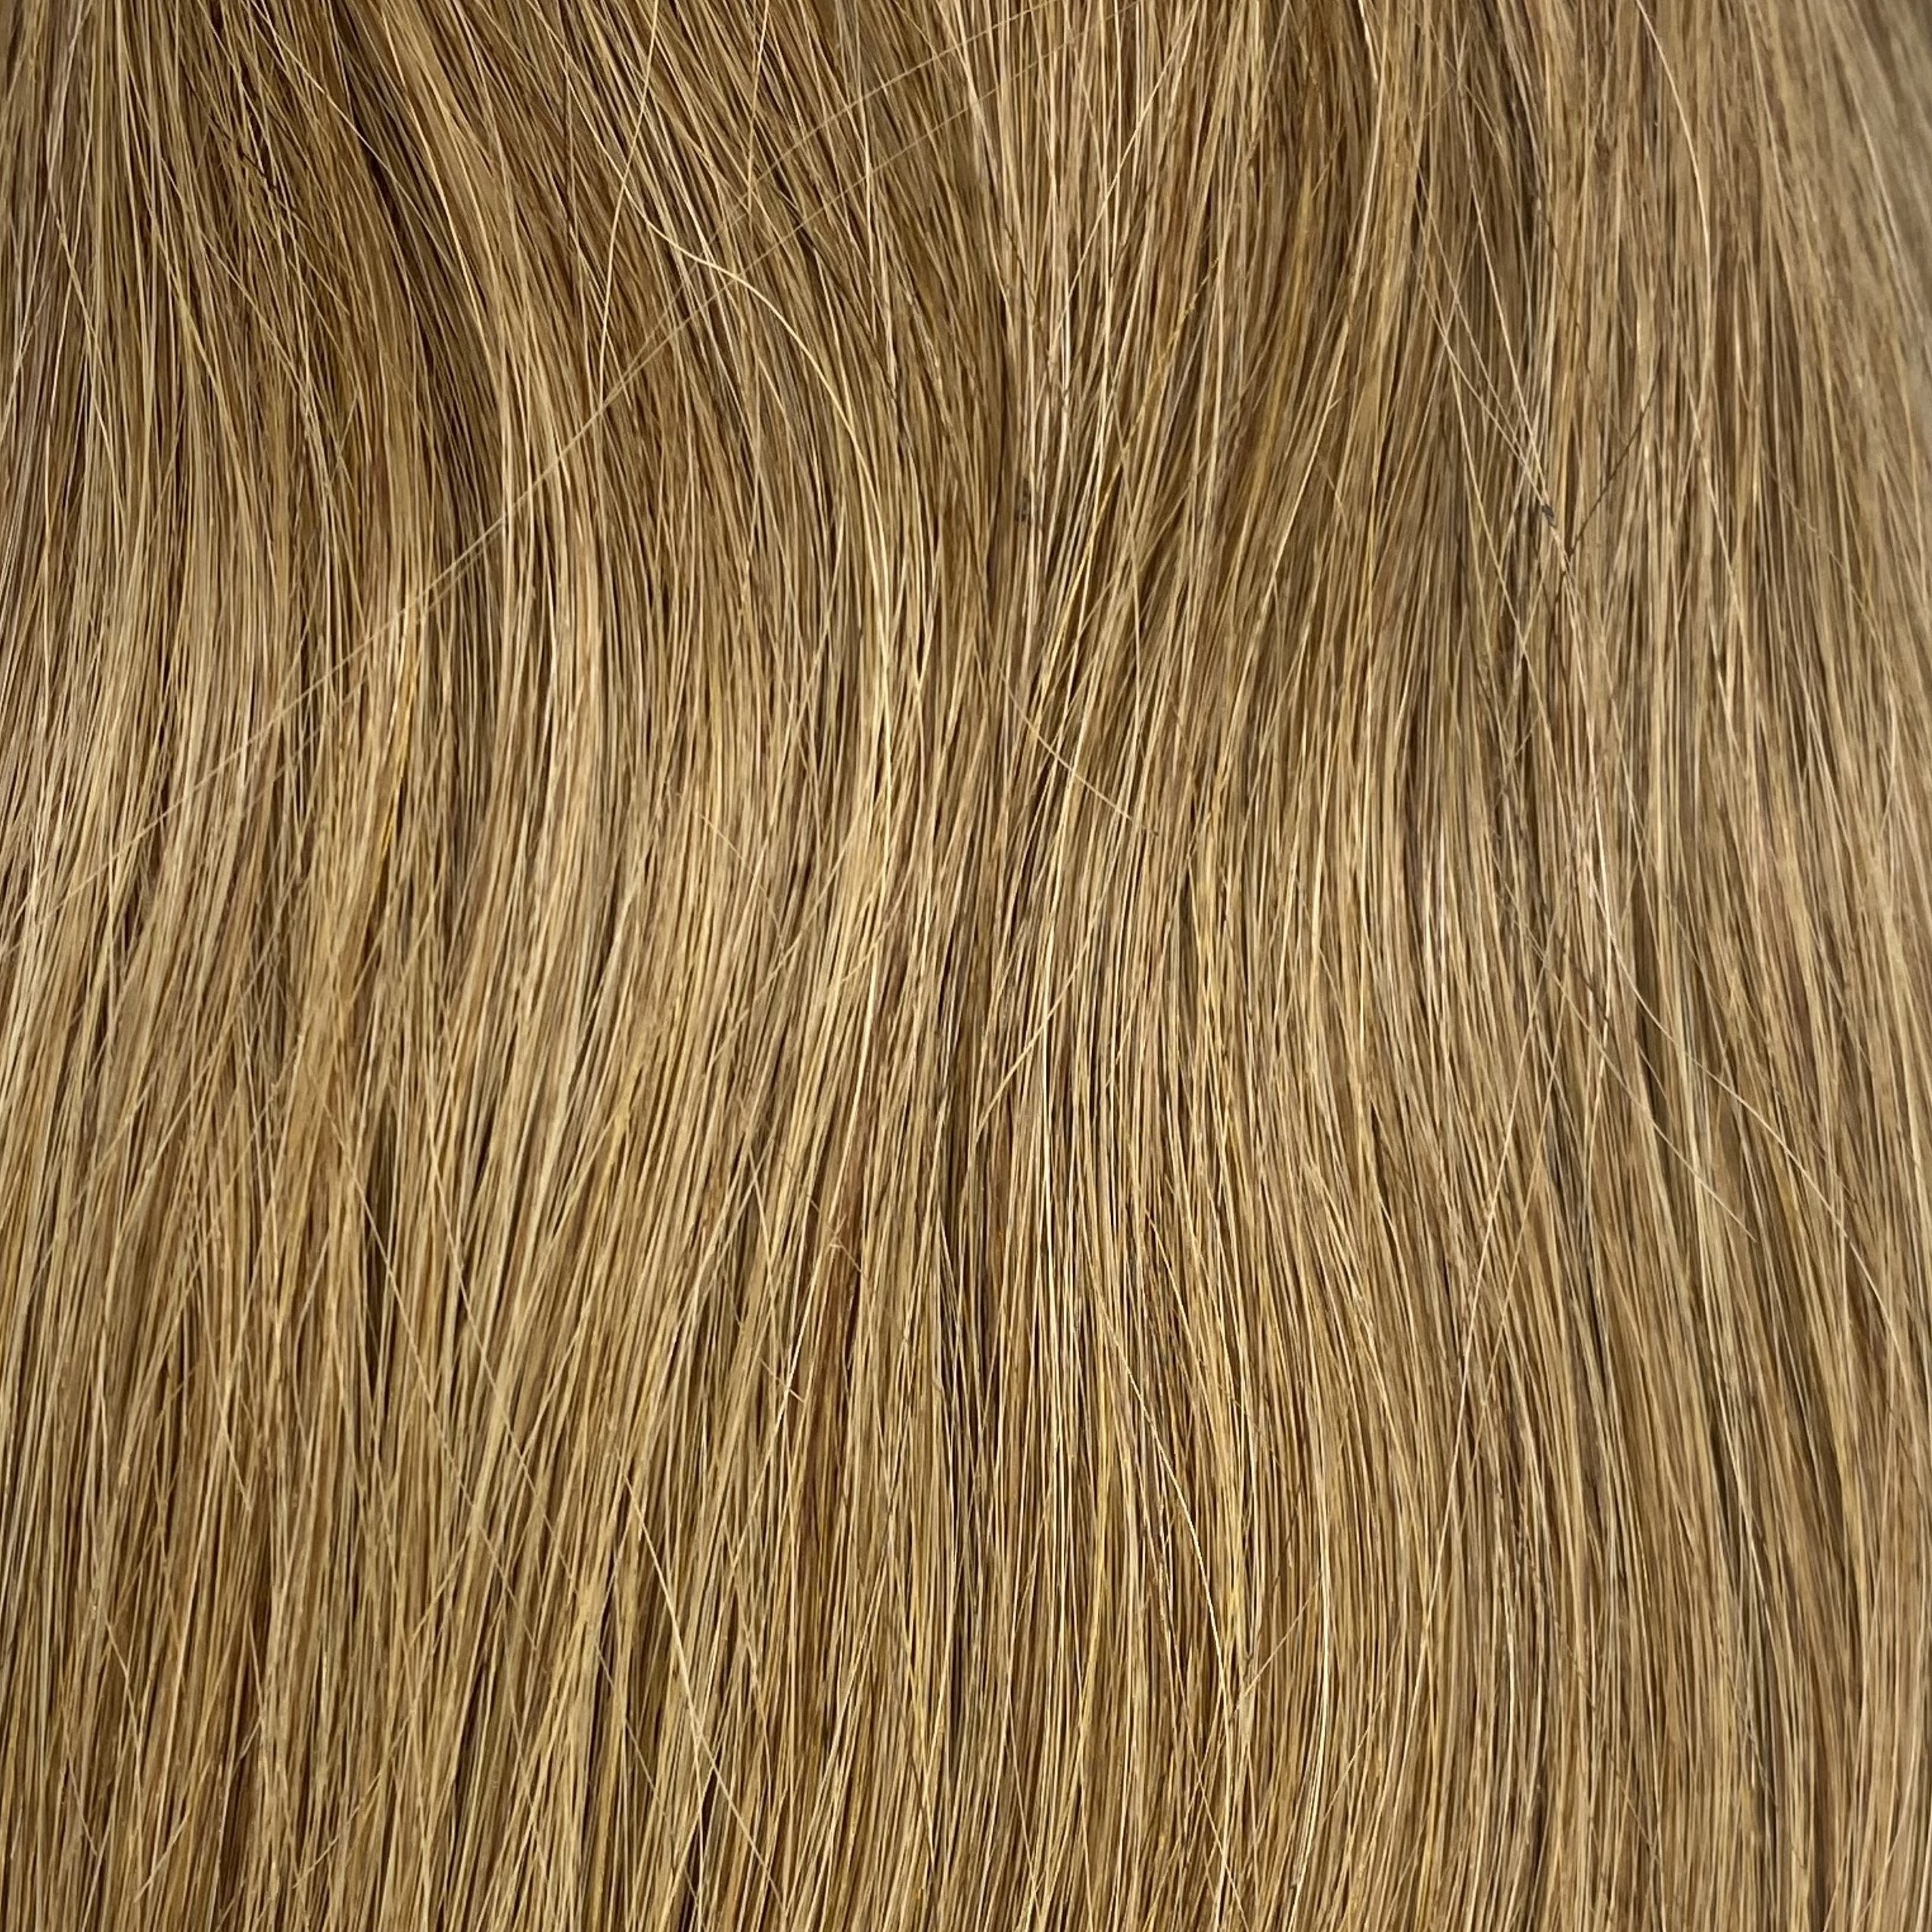 Velo Sale #8 - 16 inches - Dark Blonde - Image 1